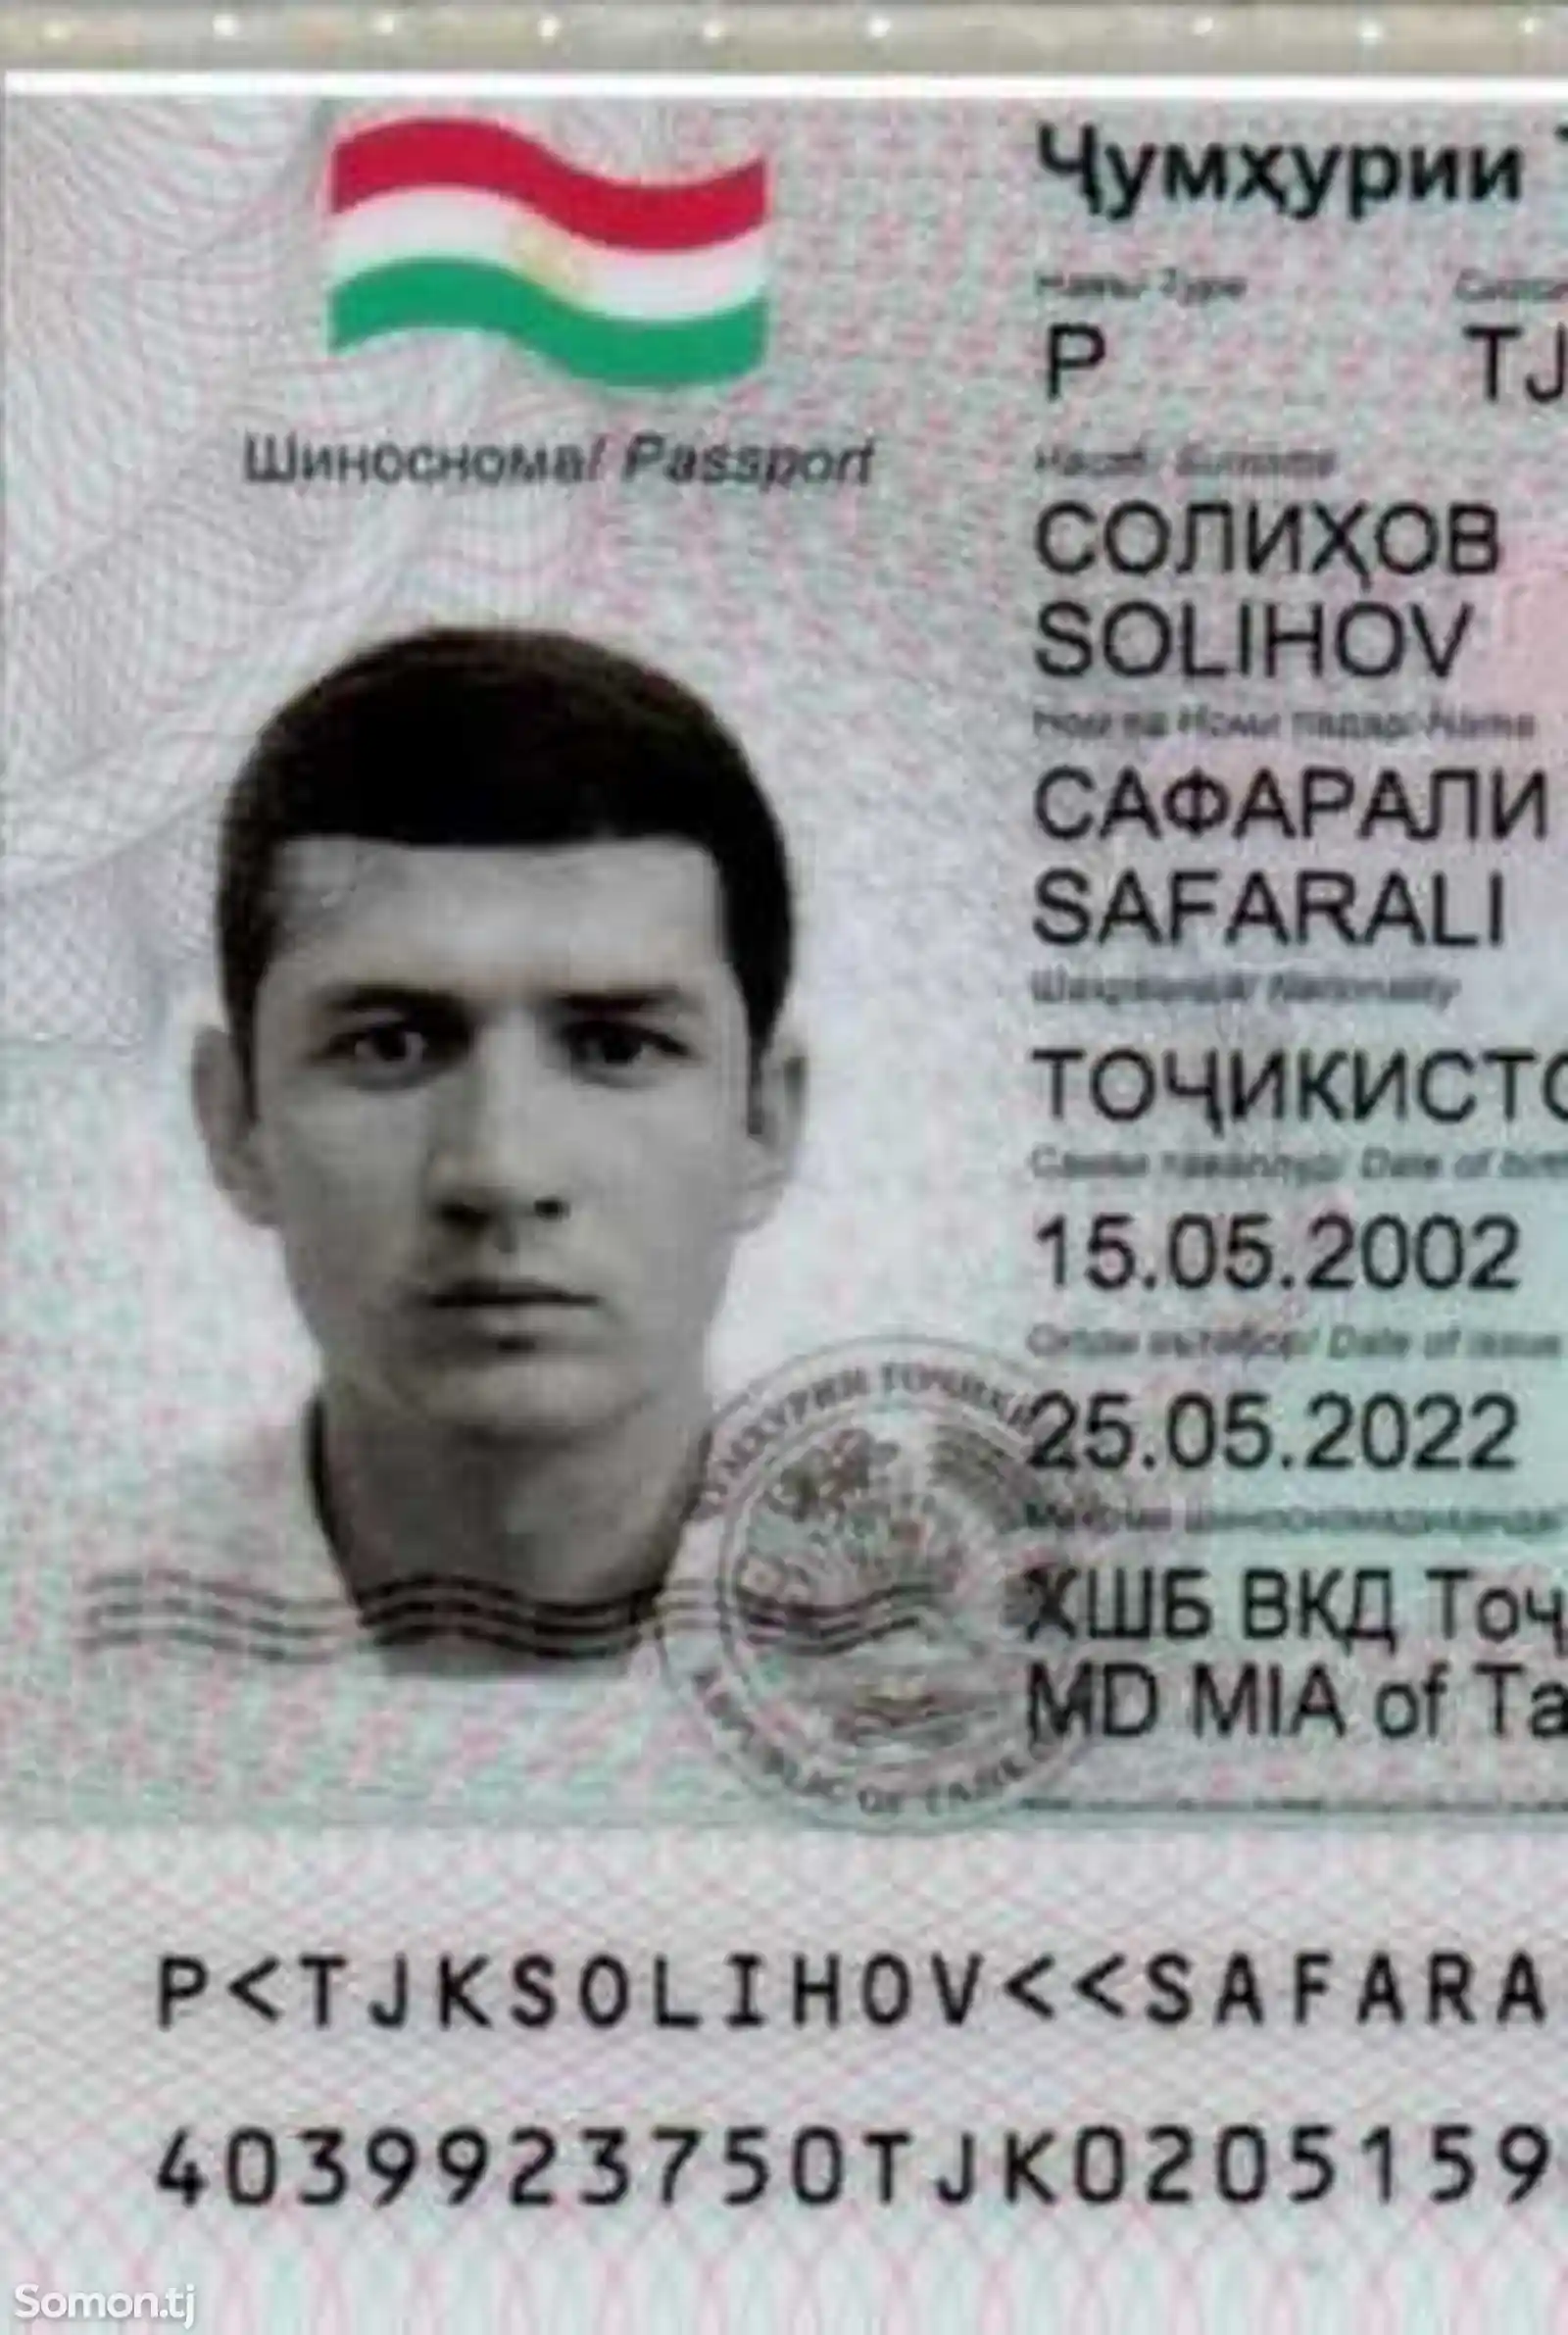 Потерян загранпаспорт на имя Солихов Сафарали